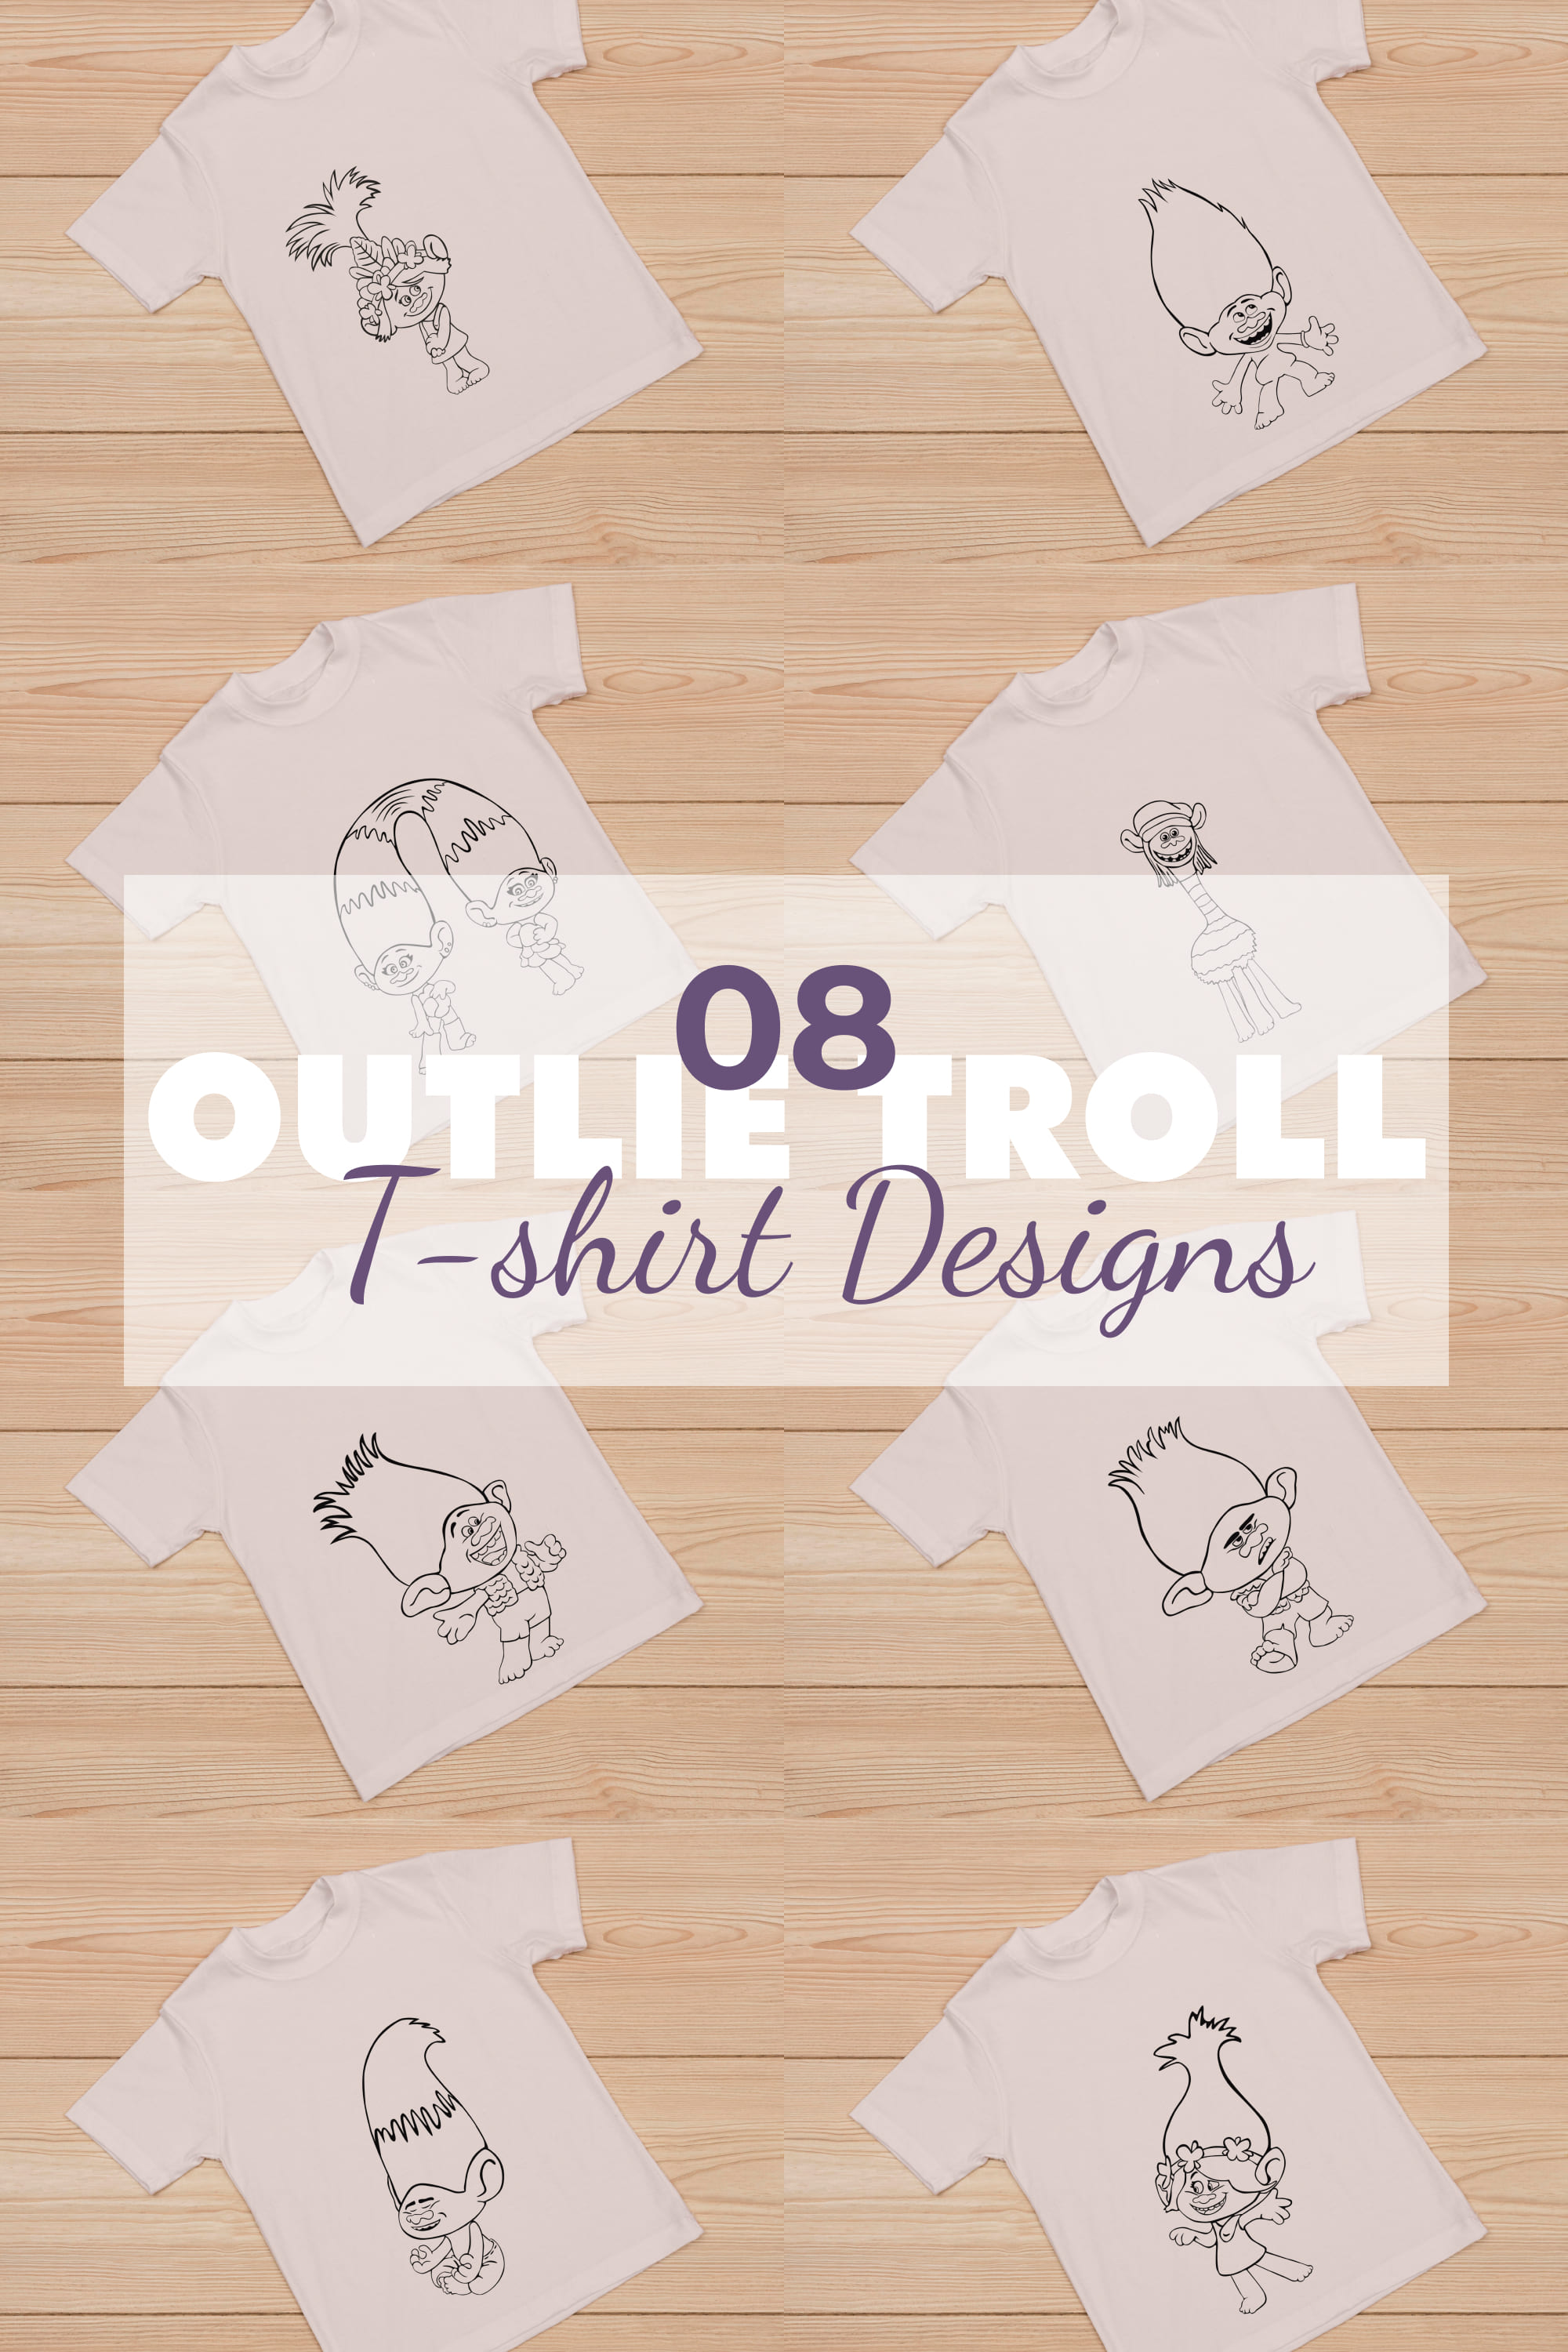 8 Outlne Troll T-shirt Designs - Pinterest.